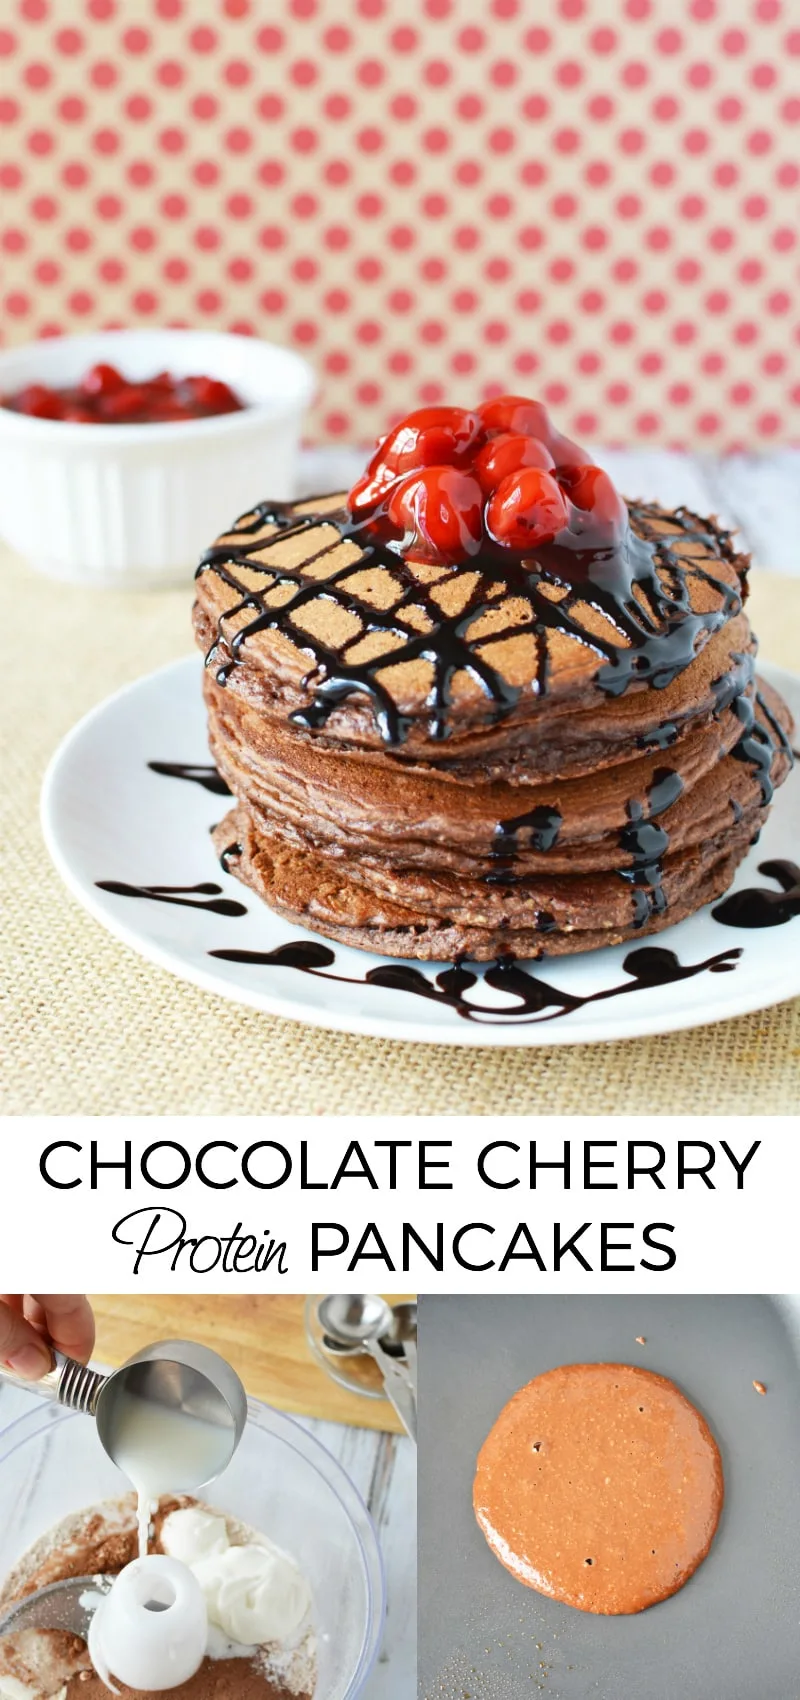 90 Calorie Chocolate Cherry Protein Pancakes